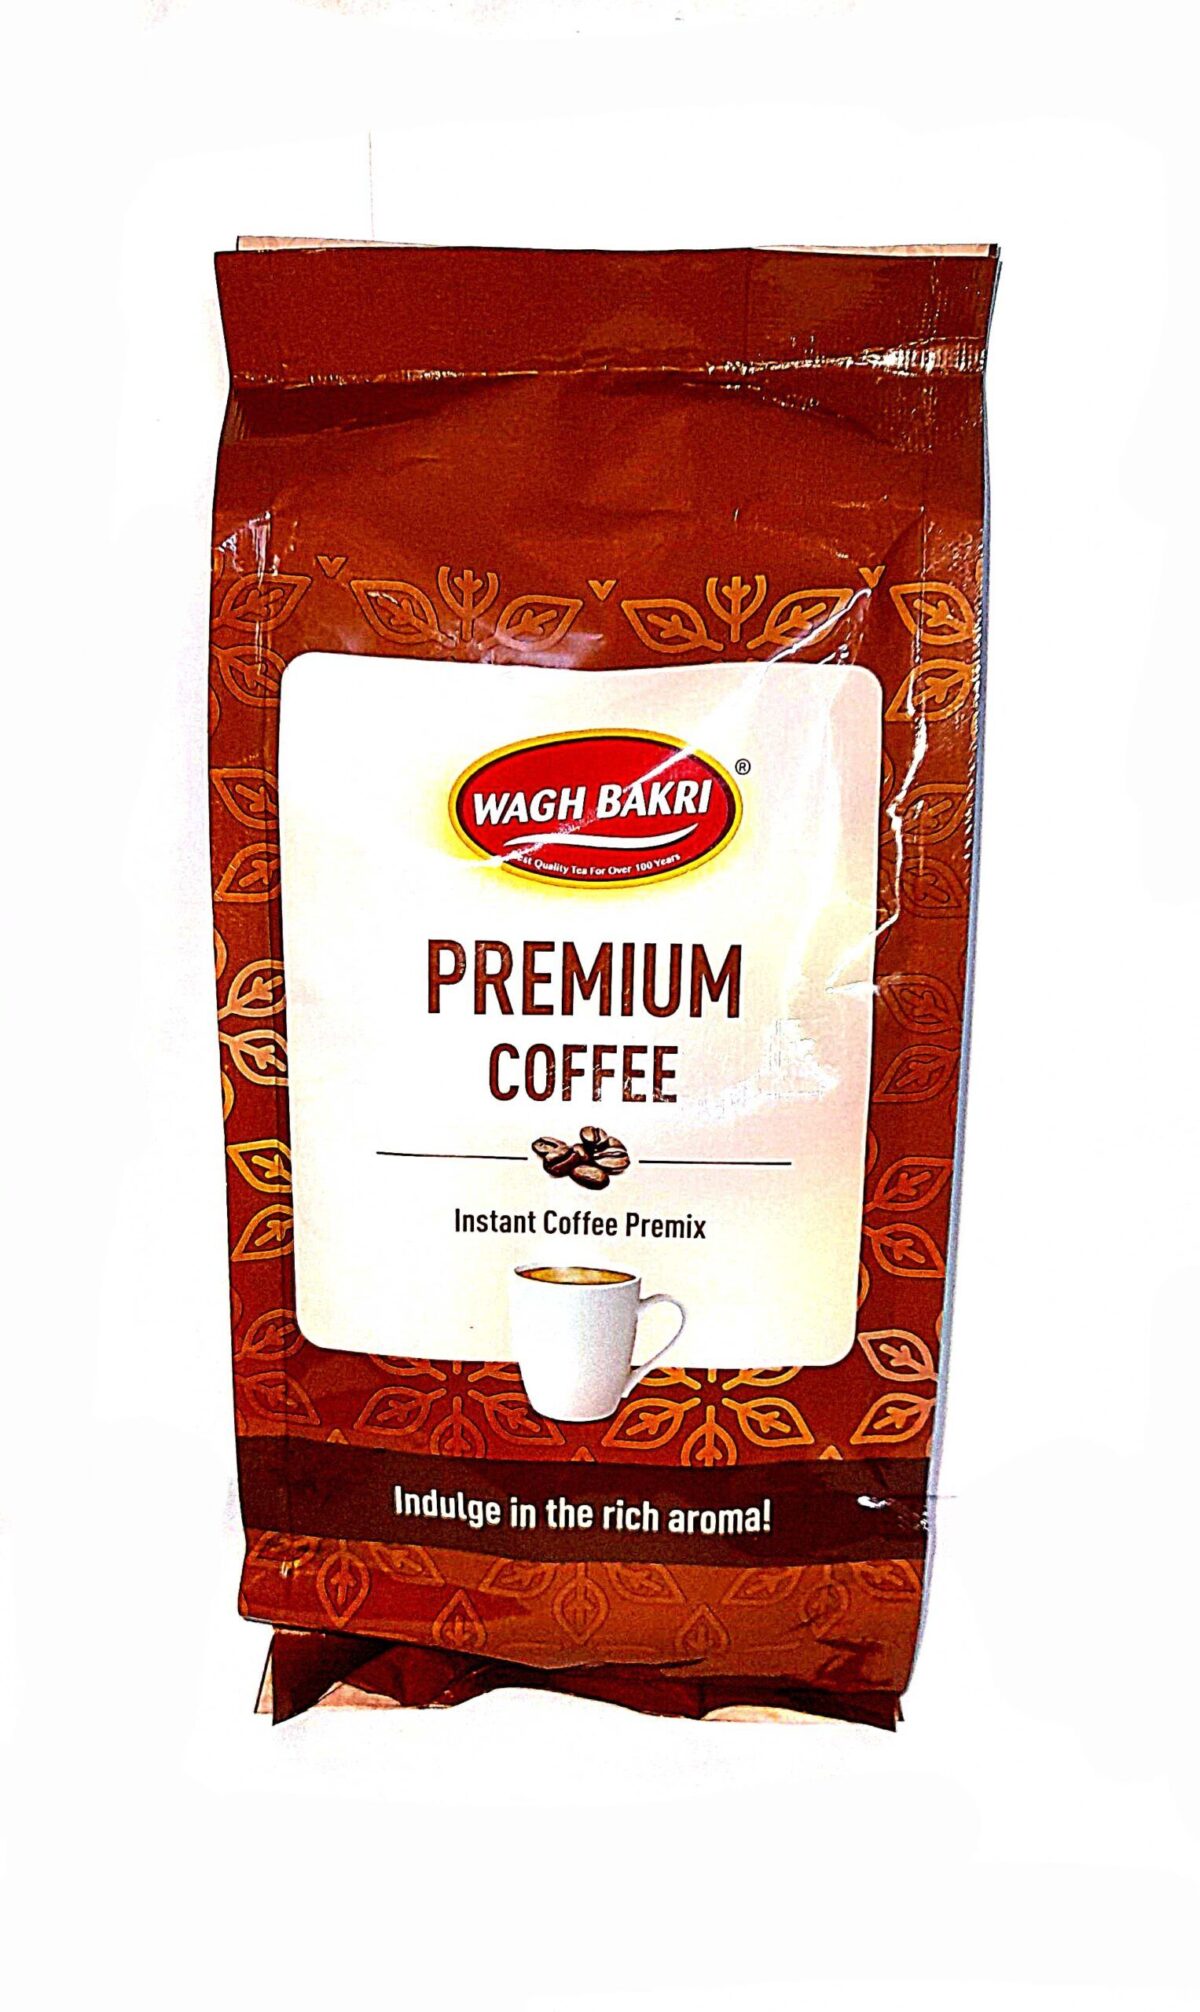 Wagh Bakri Premium Coffee Premix Front scaled